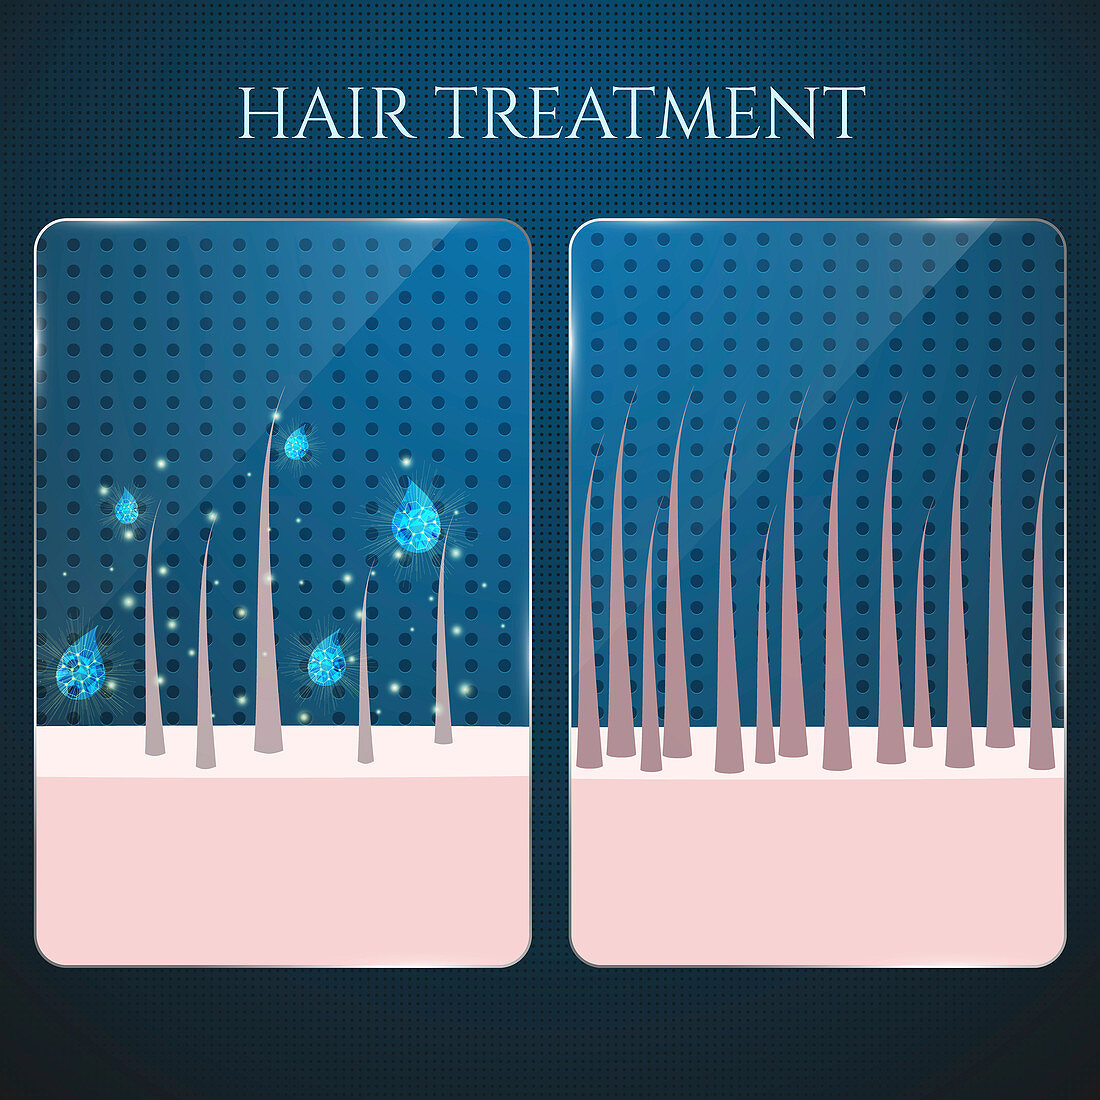 Hair follicle treatment, illustration